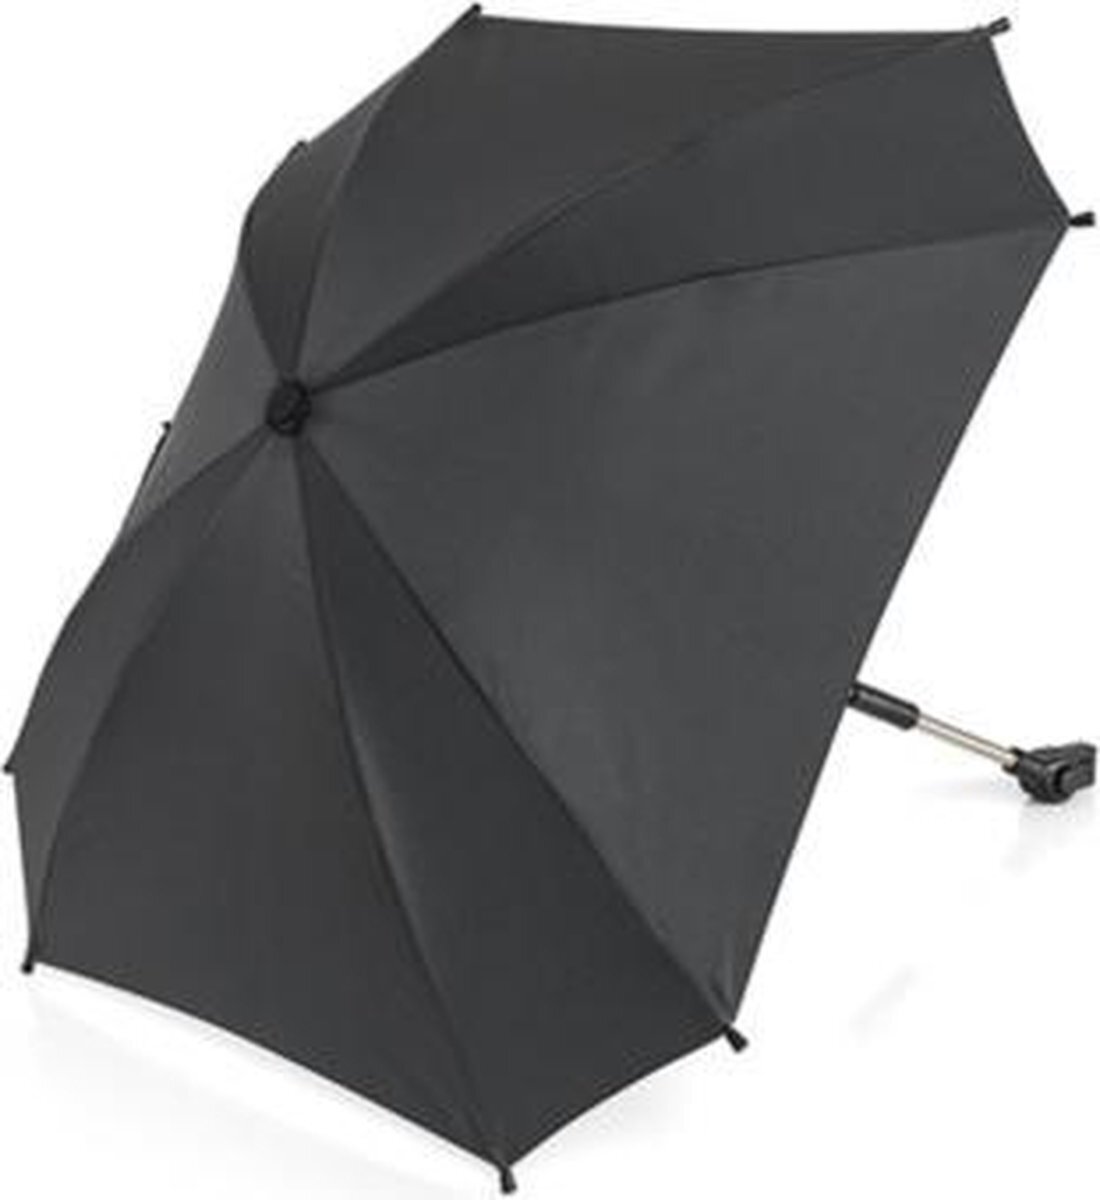 Reer ShineSafe kinderwagen parasol zwart zwart